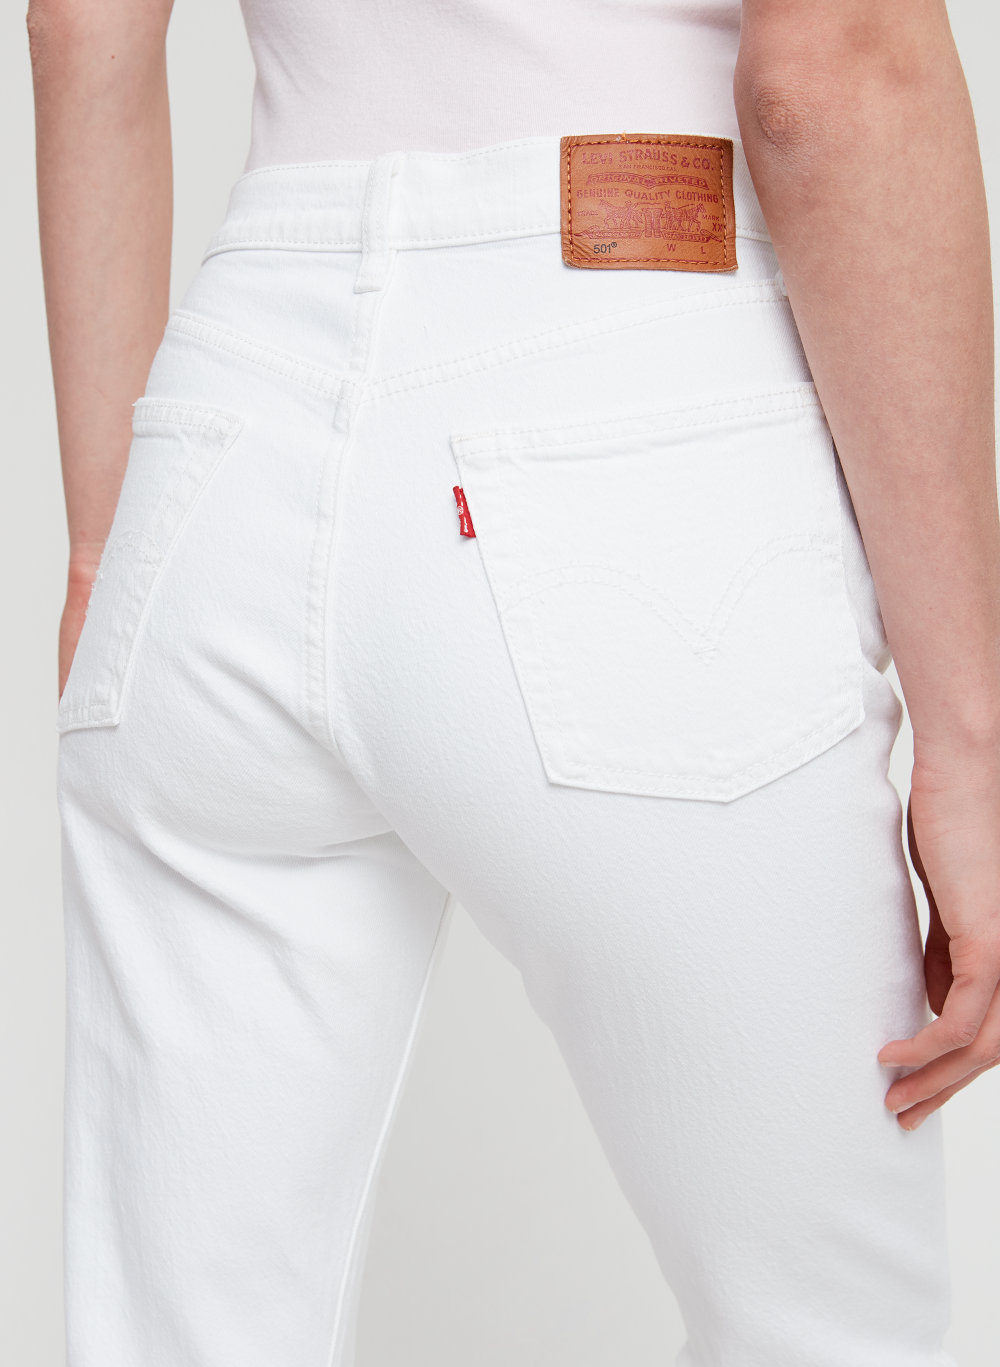 501 levi's white jeans